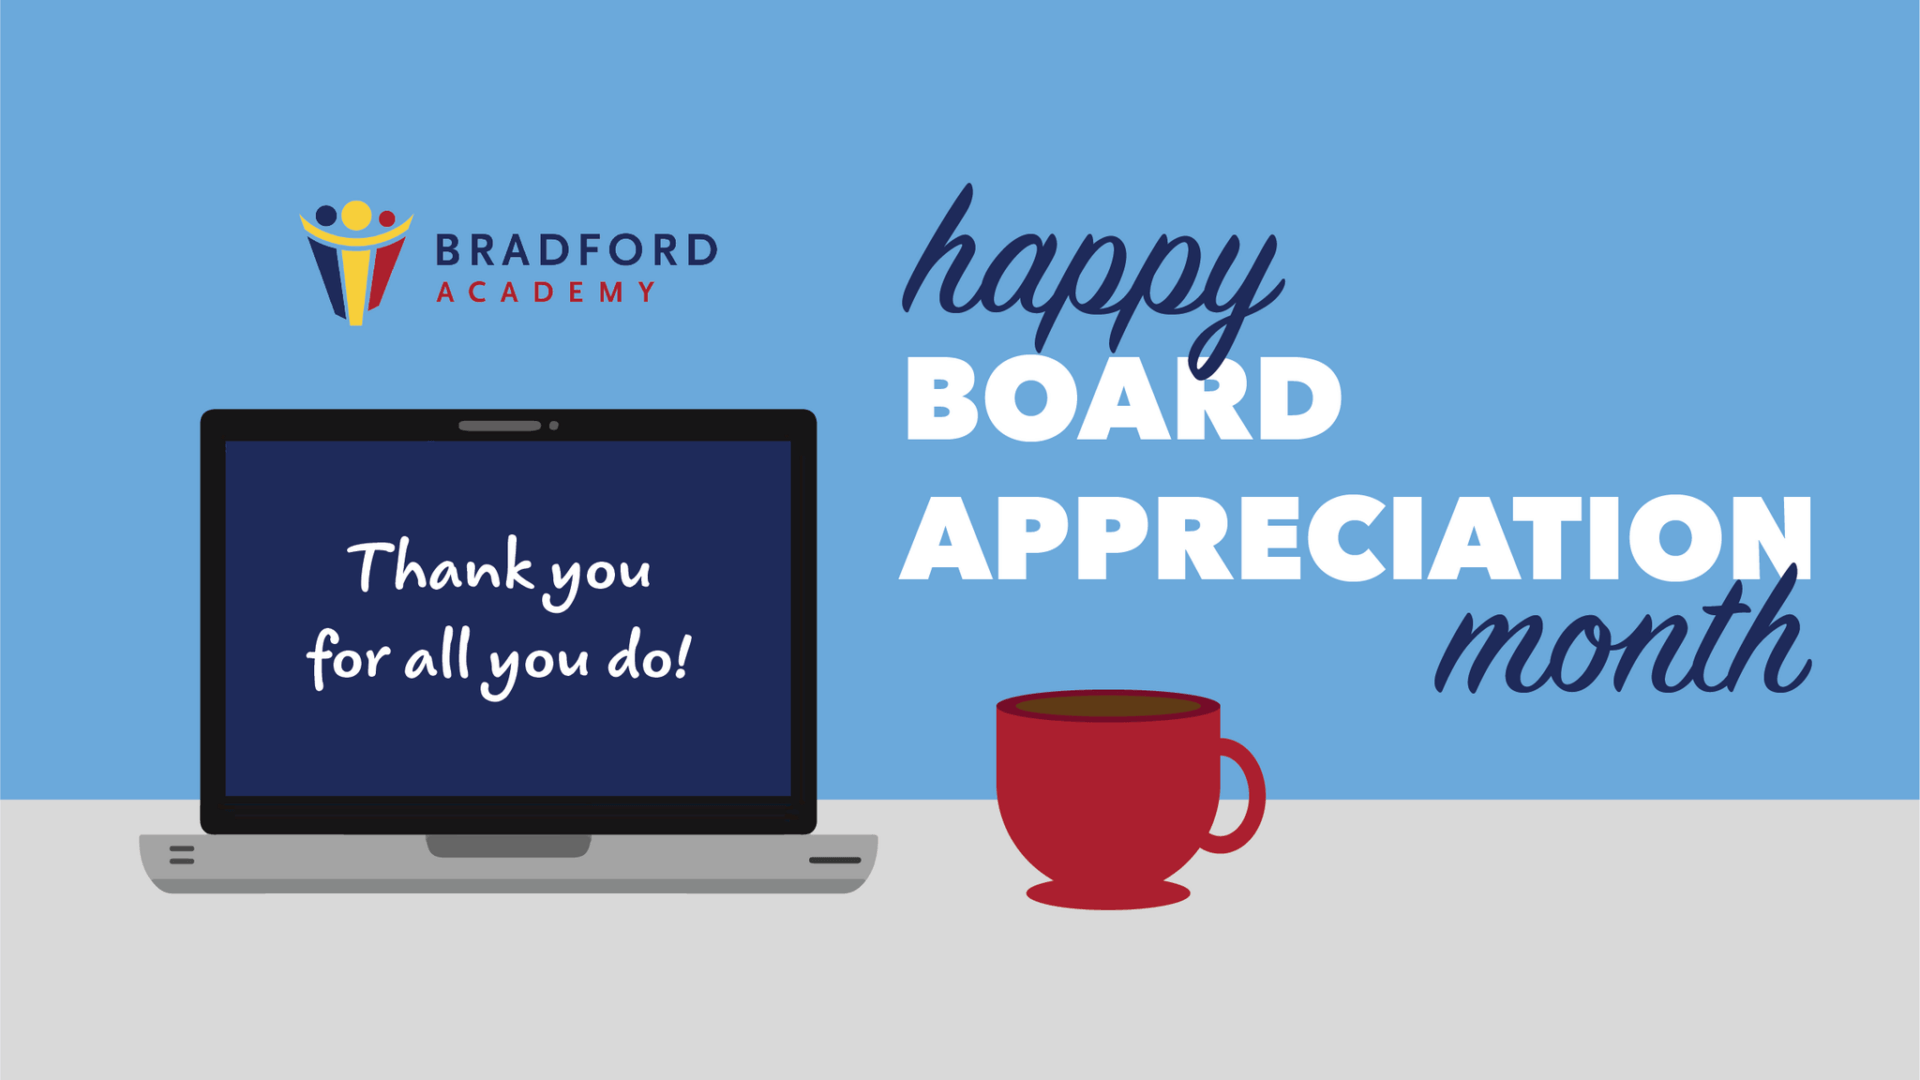 Happy Board Appreciation Month, decorative image for bradford academy blog.